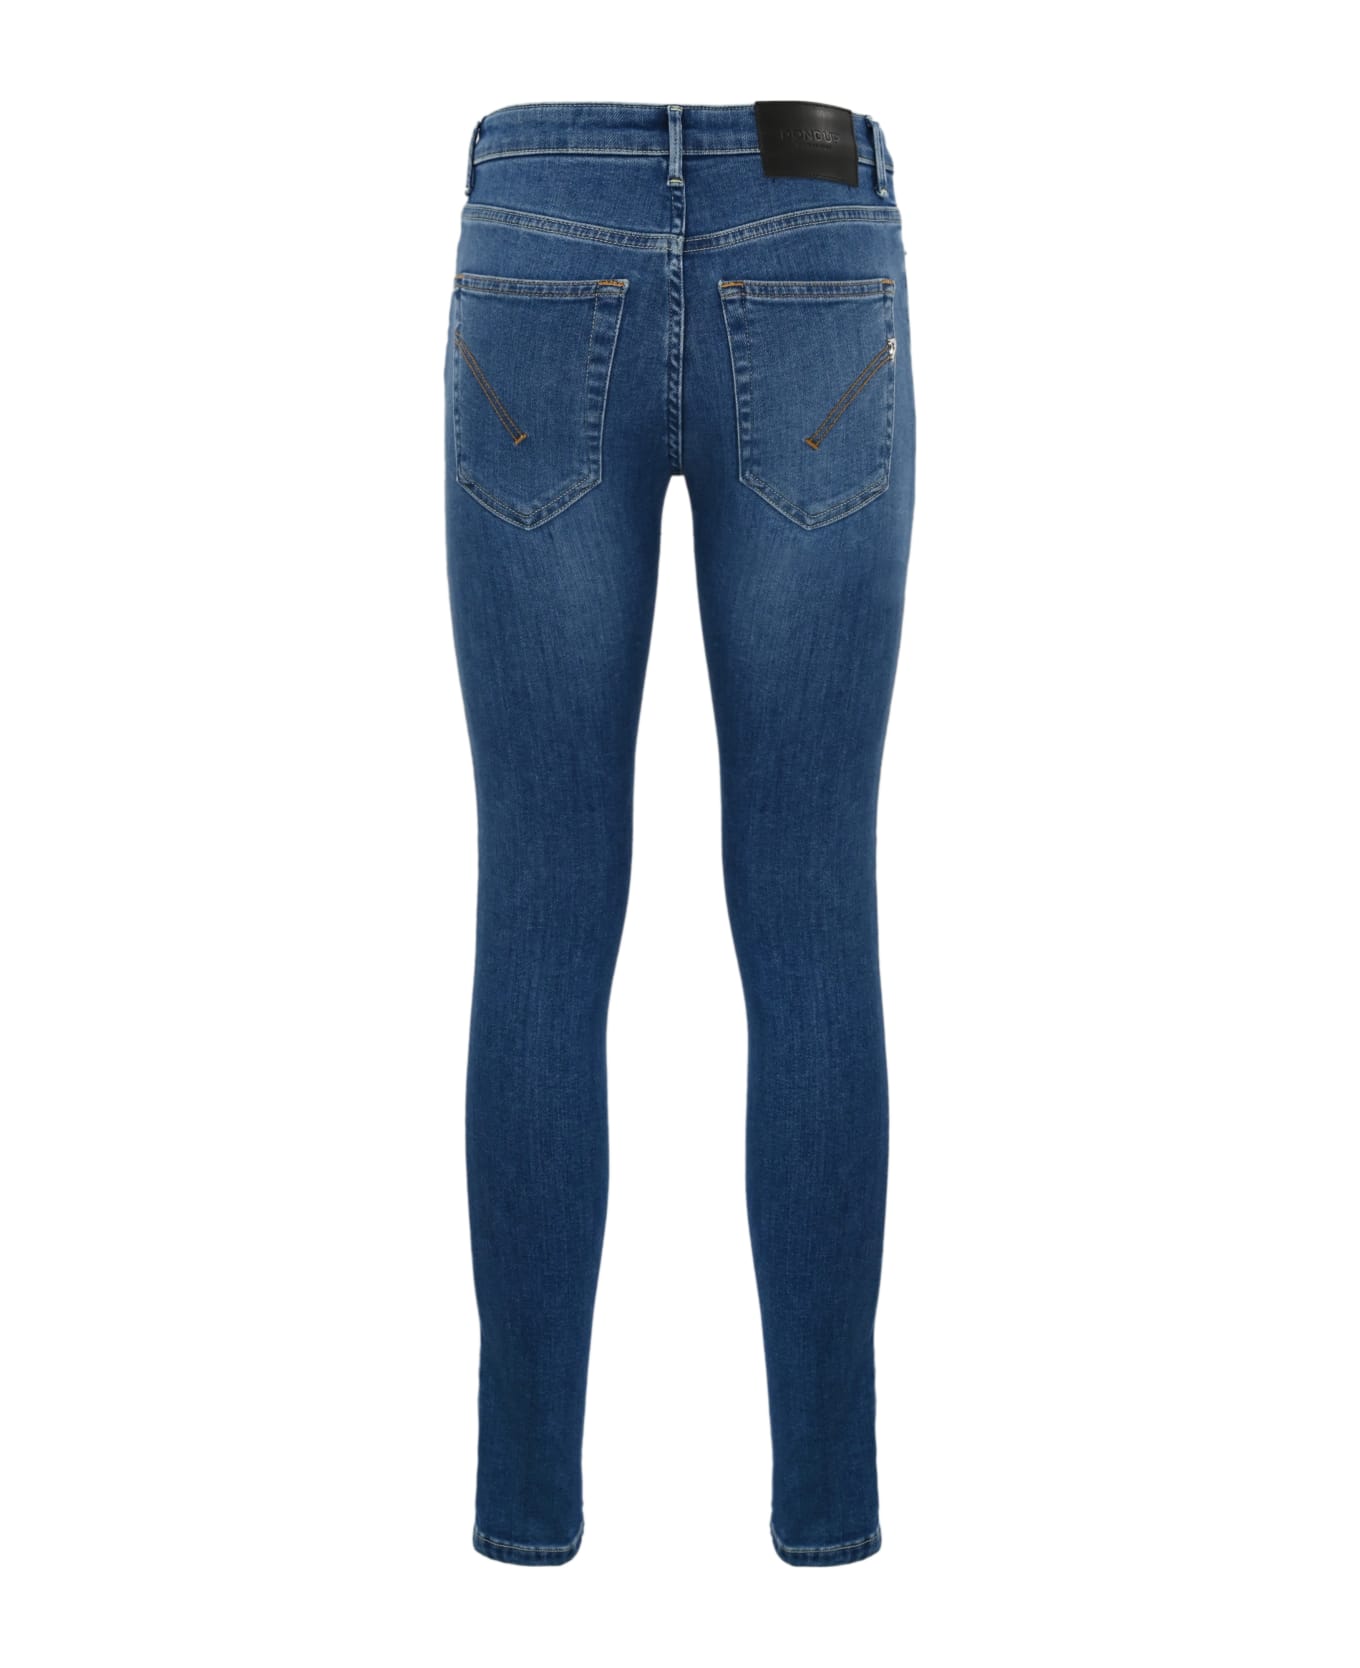 Dondup Iris Skinny Jeans - Denim